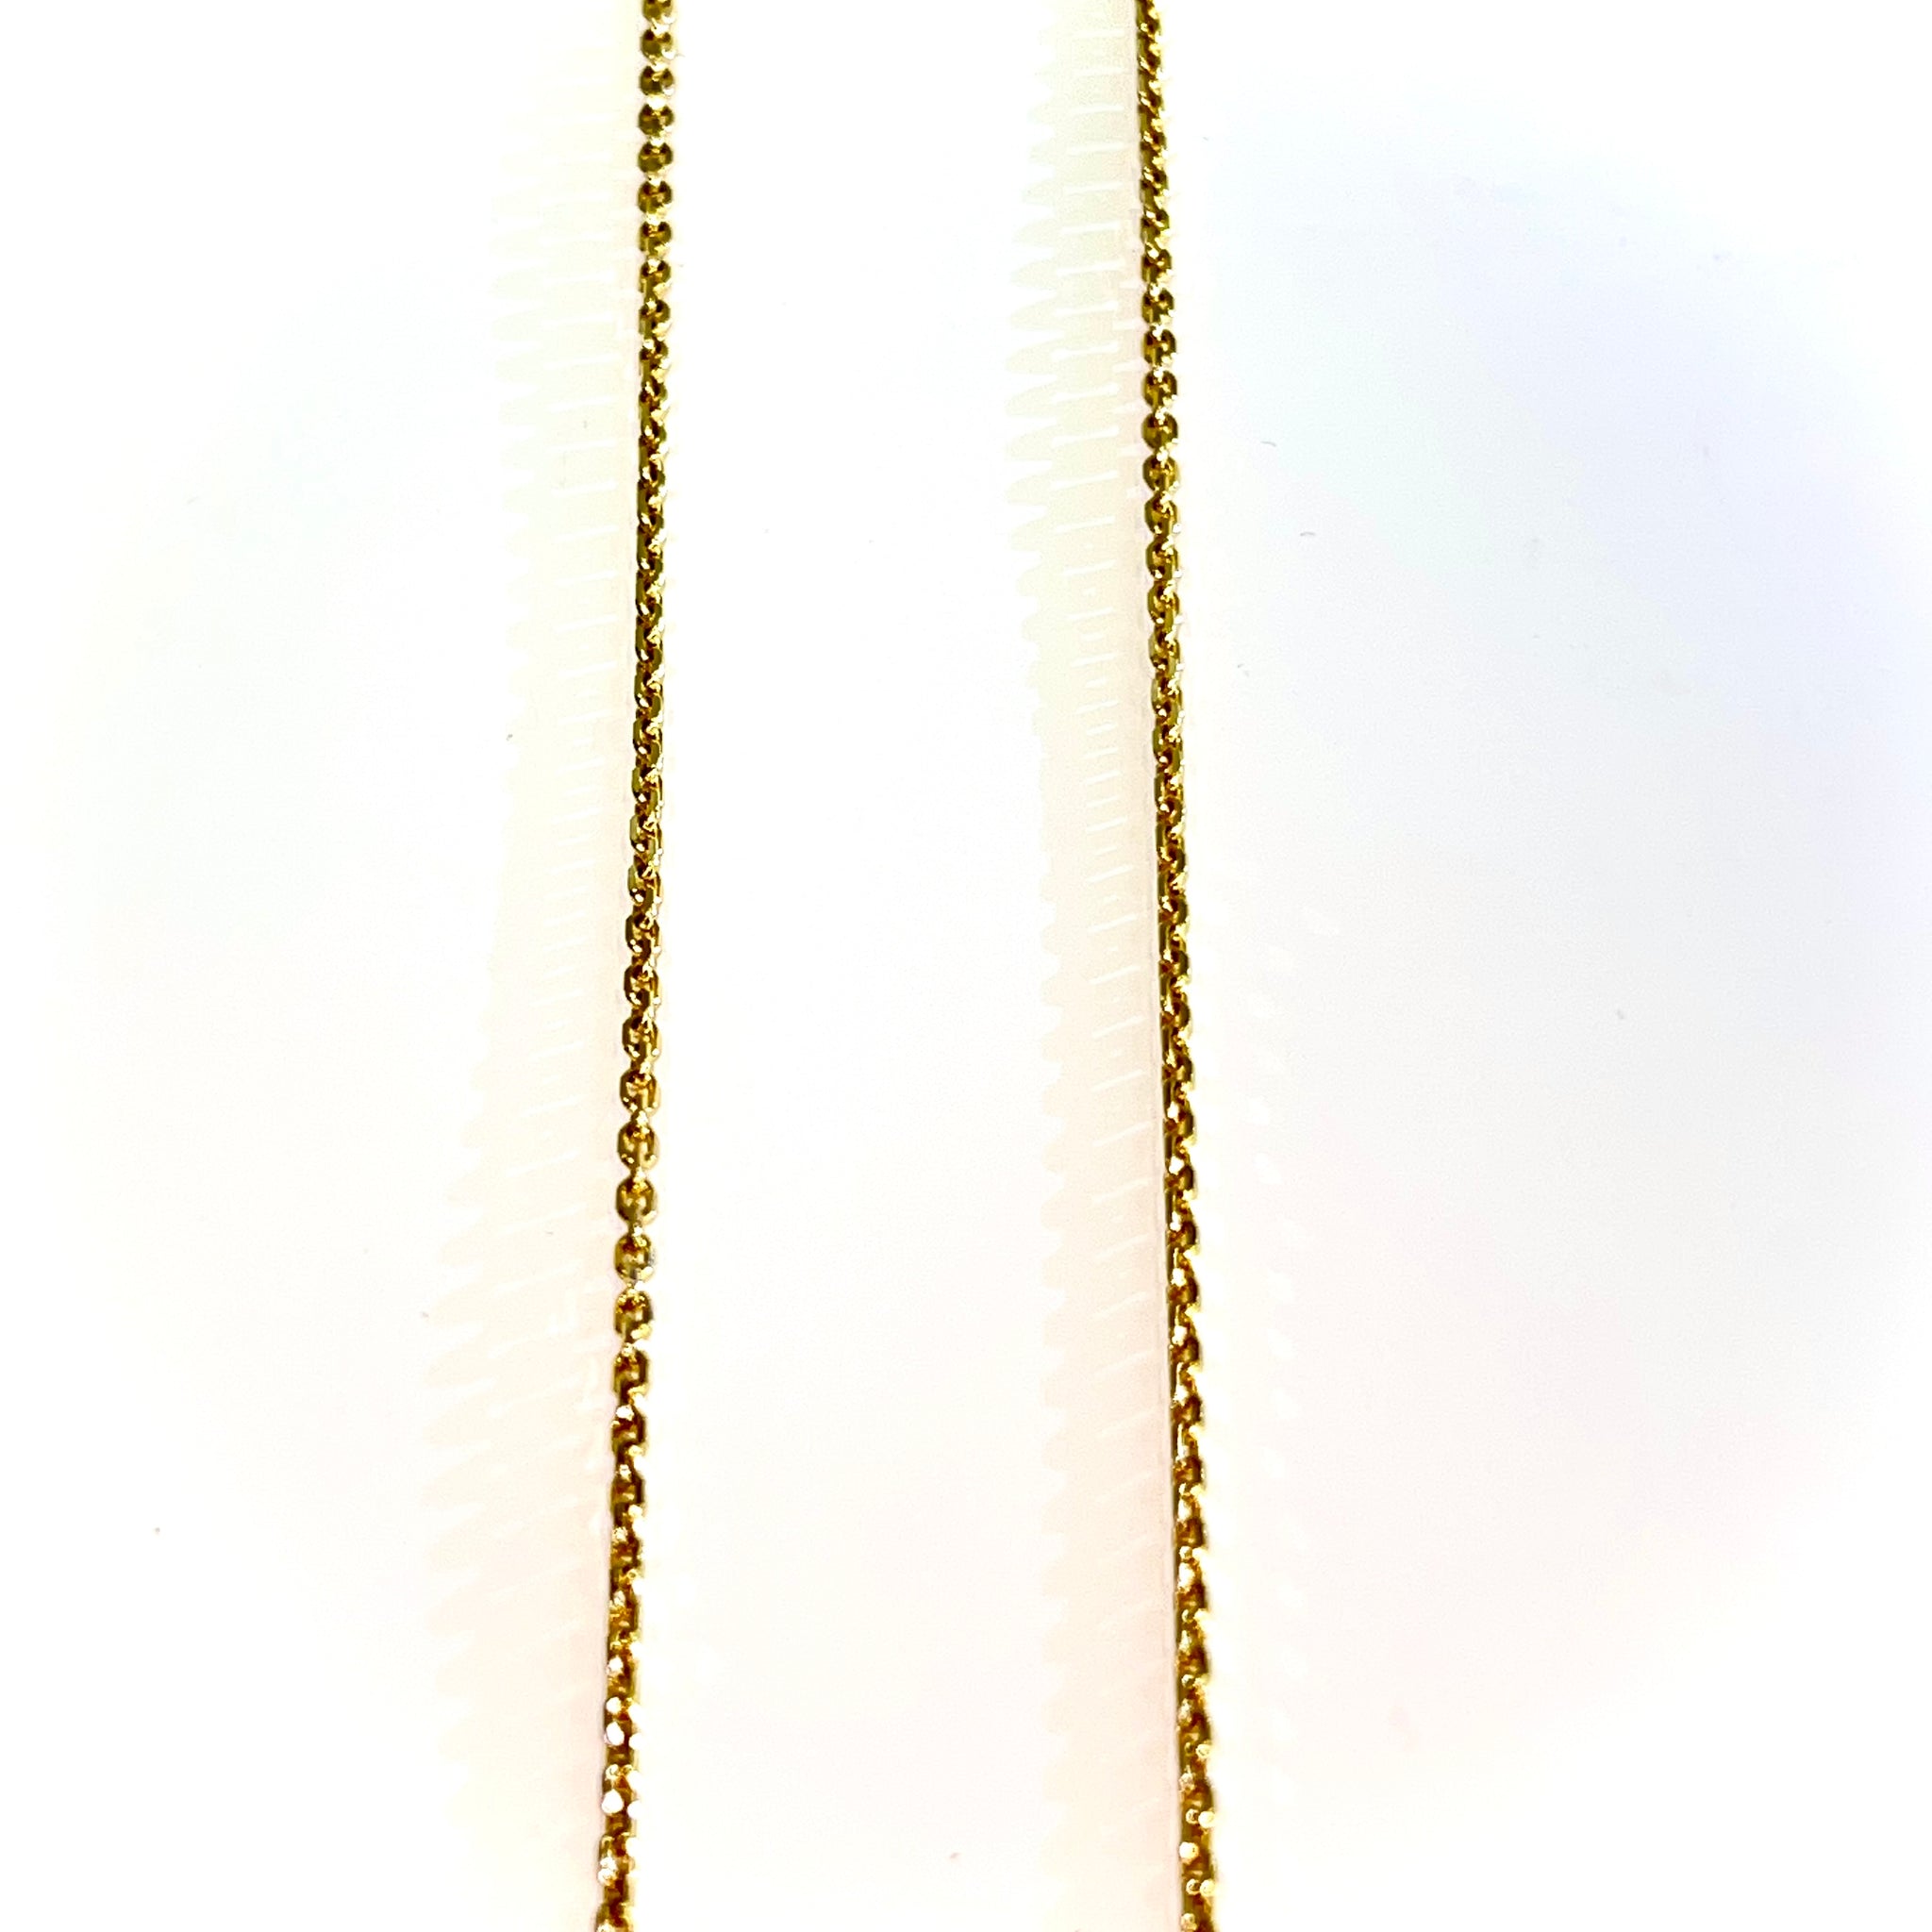 Jail Link Chain - 14 carat gold - 60cm / 4.5mm